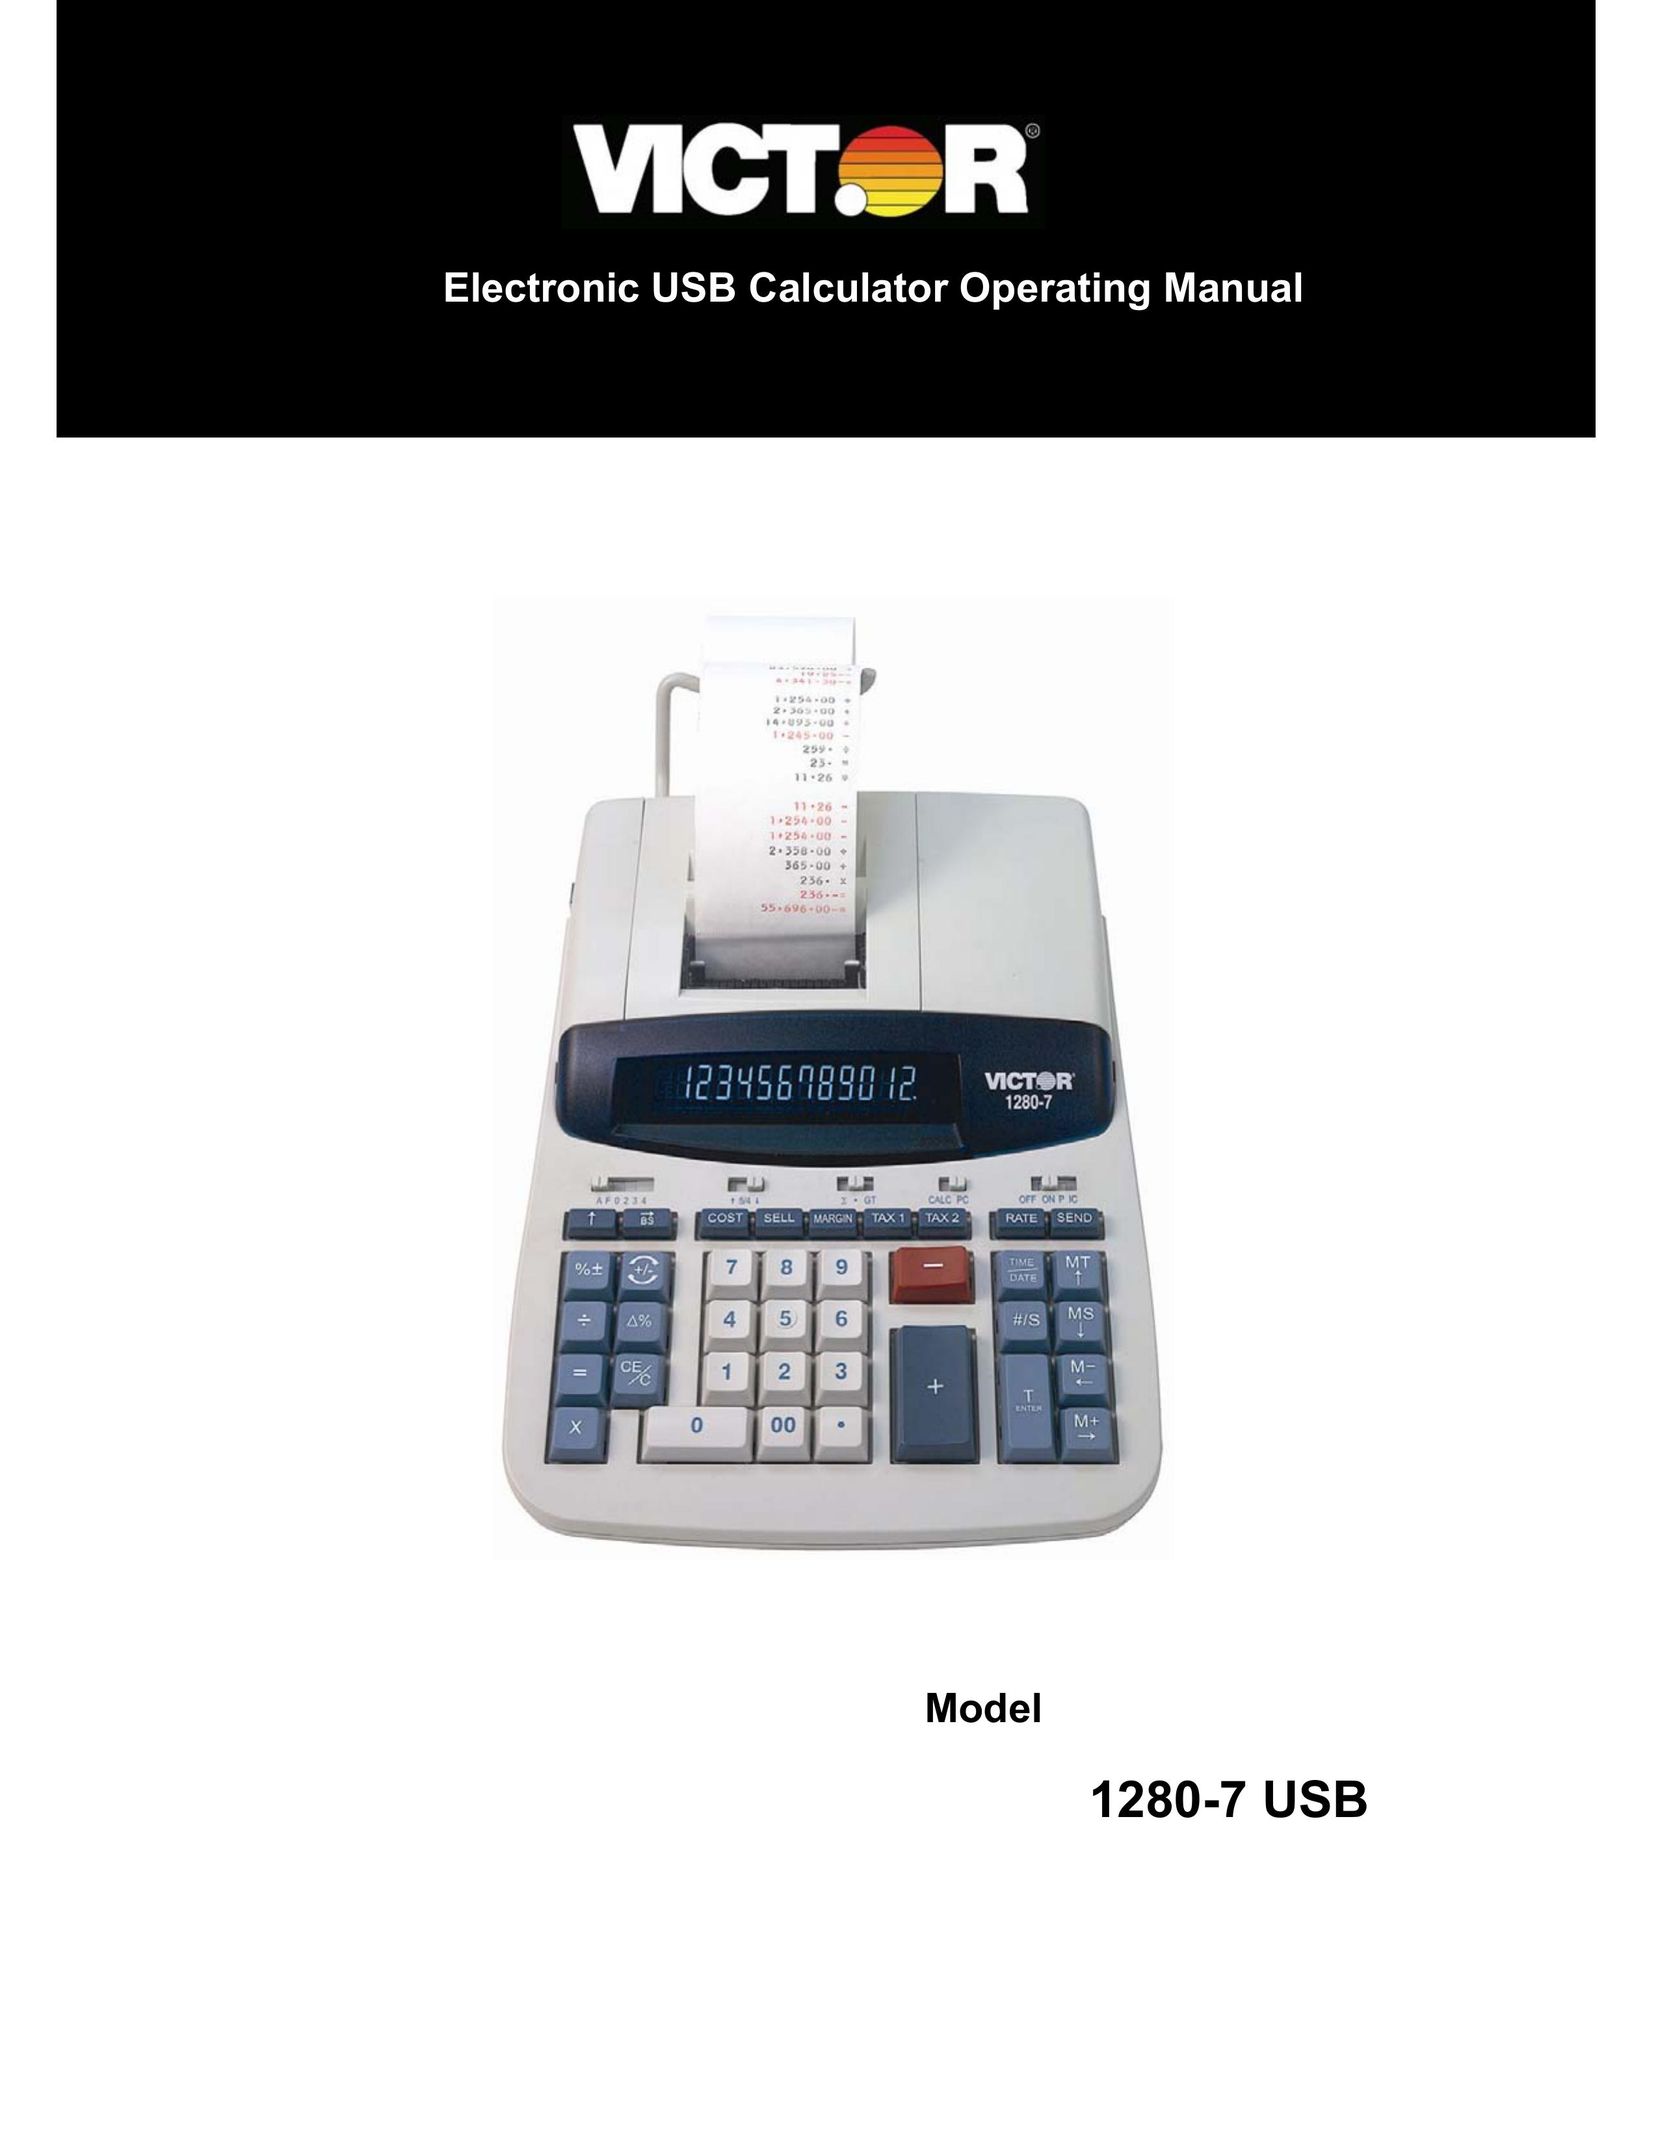 Victor 1280-7 USB Calculator User Manual